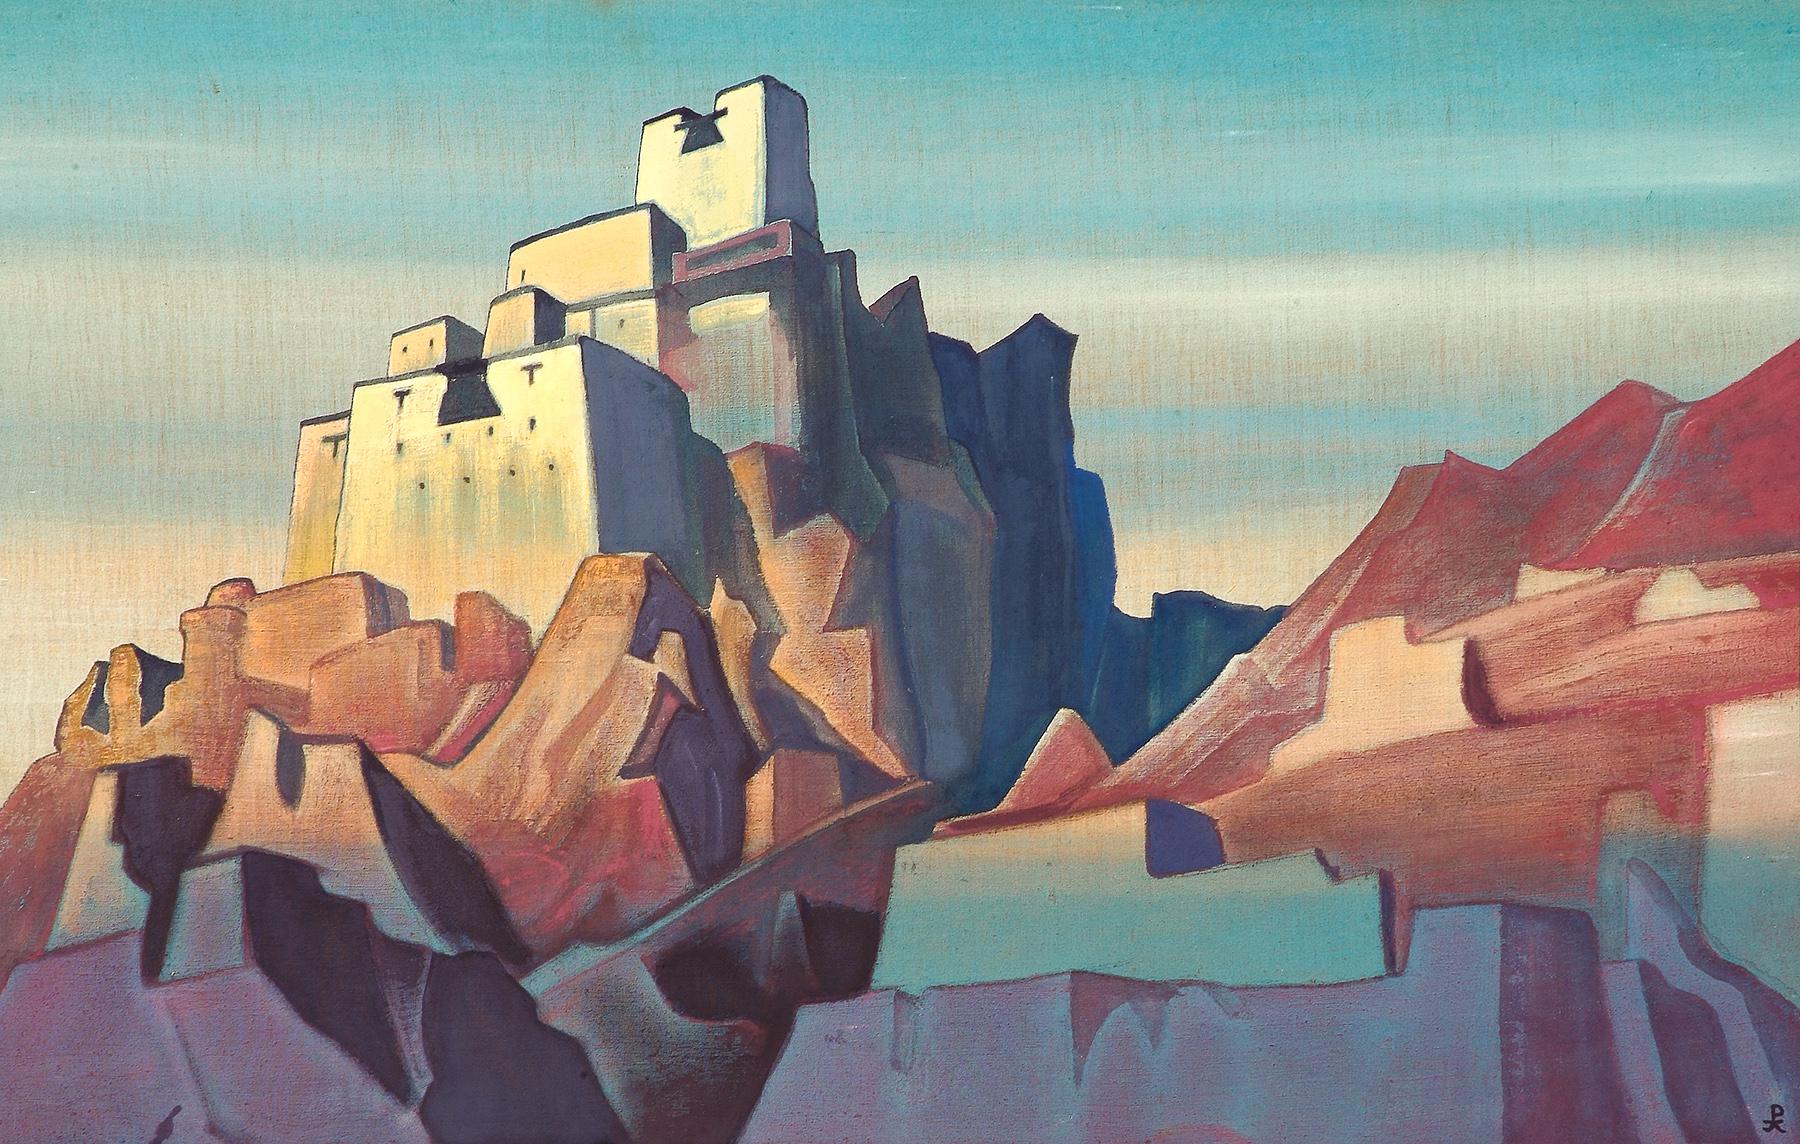 Artistic Castle HD Wallpaper | Background Image